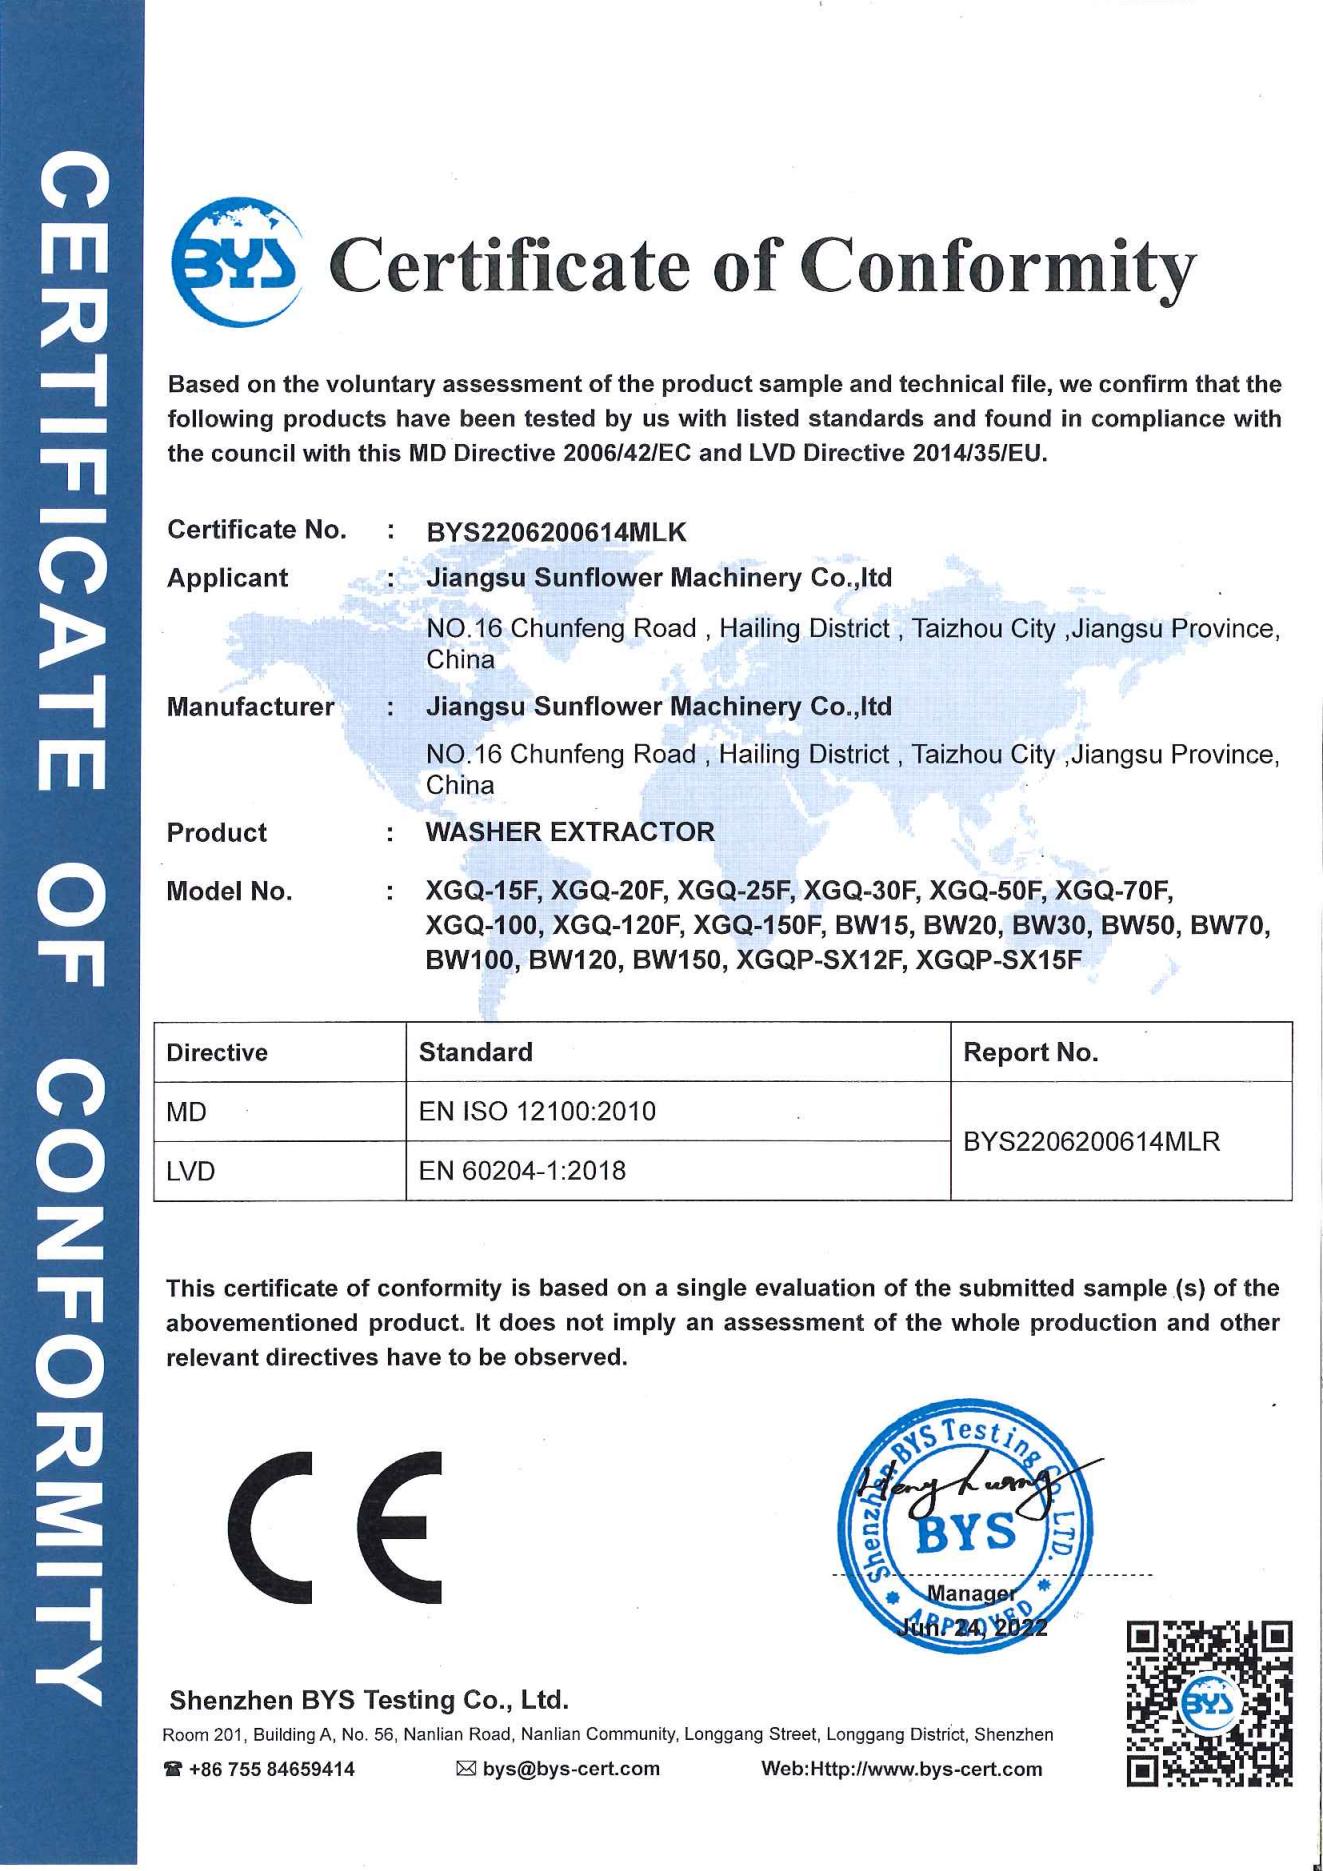 Washer Extractor Certificate